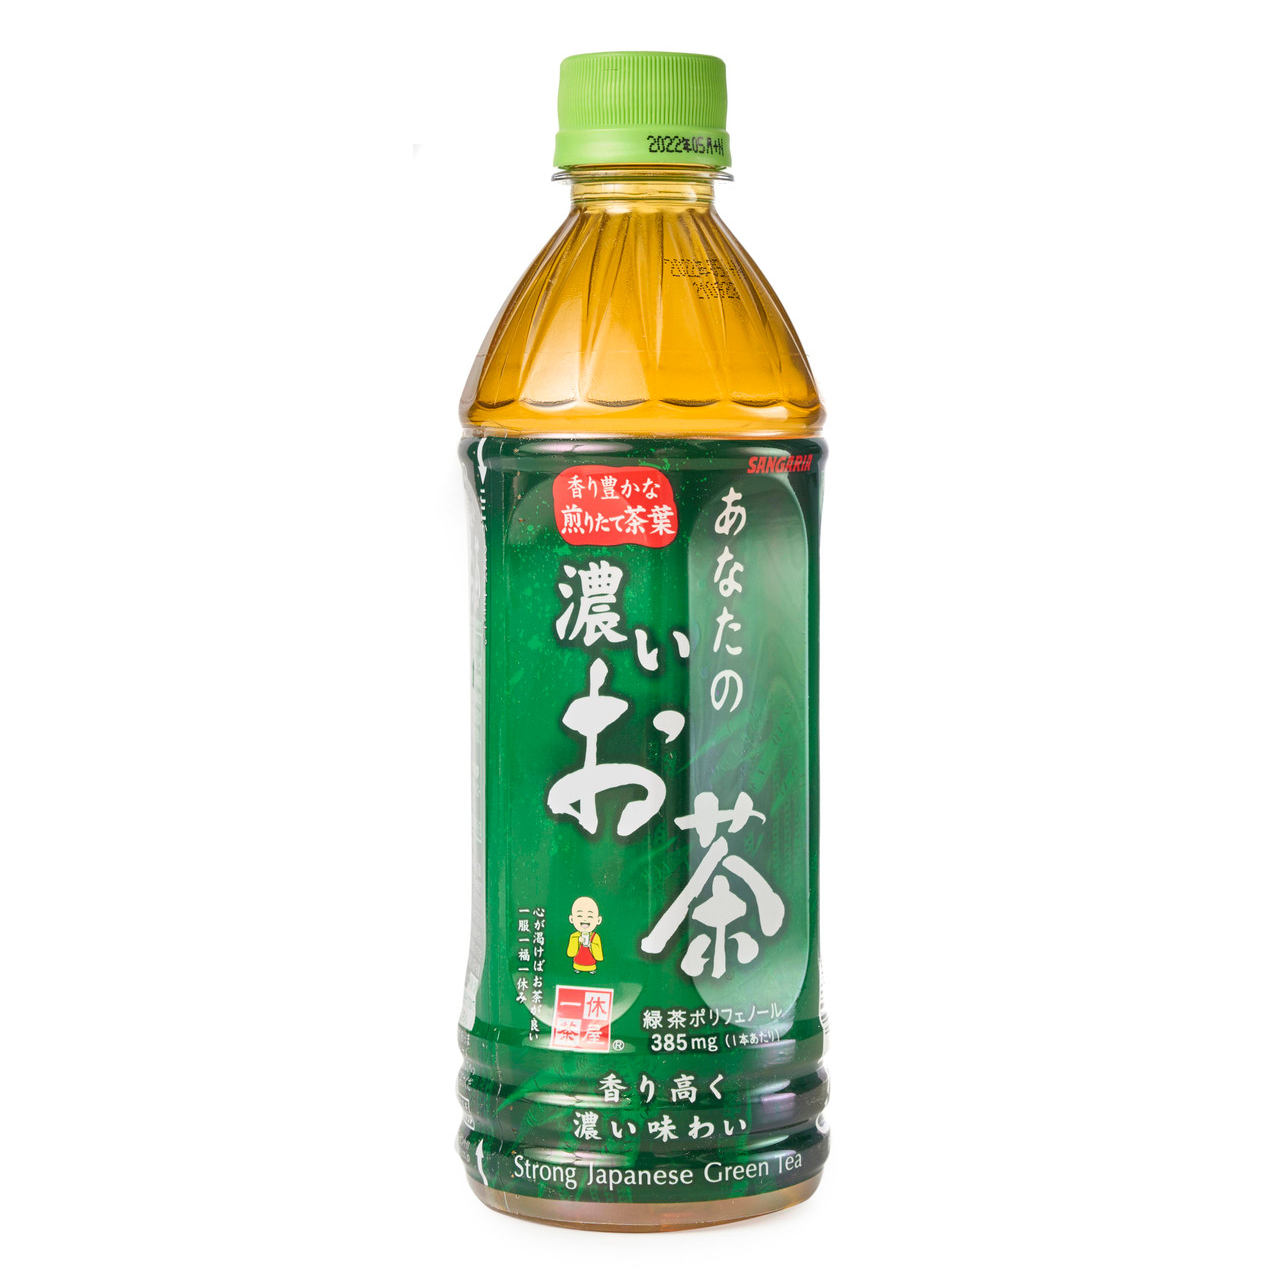 Sangaria Strong Japanese green tea